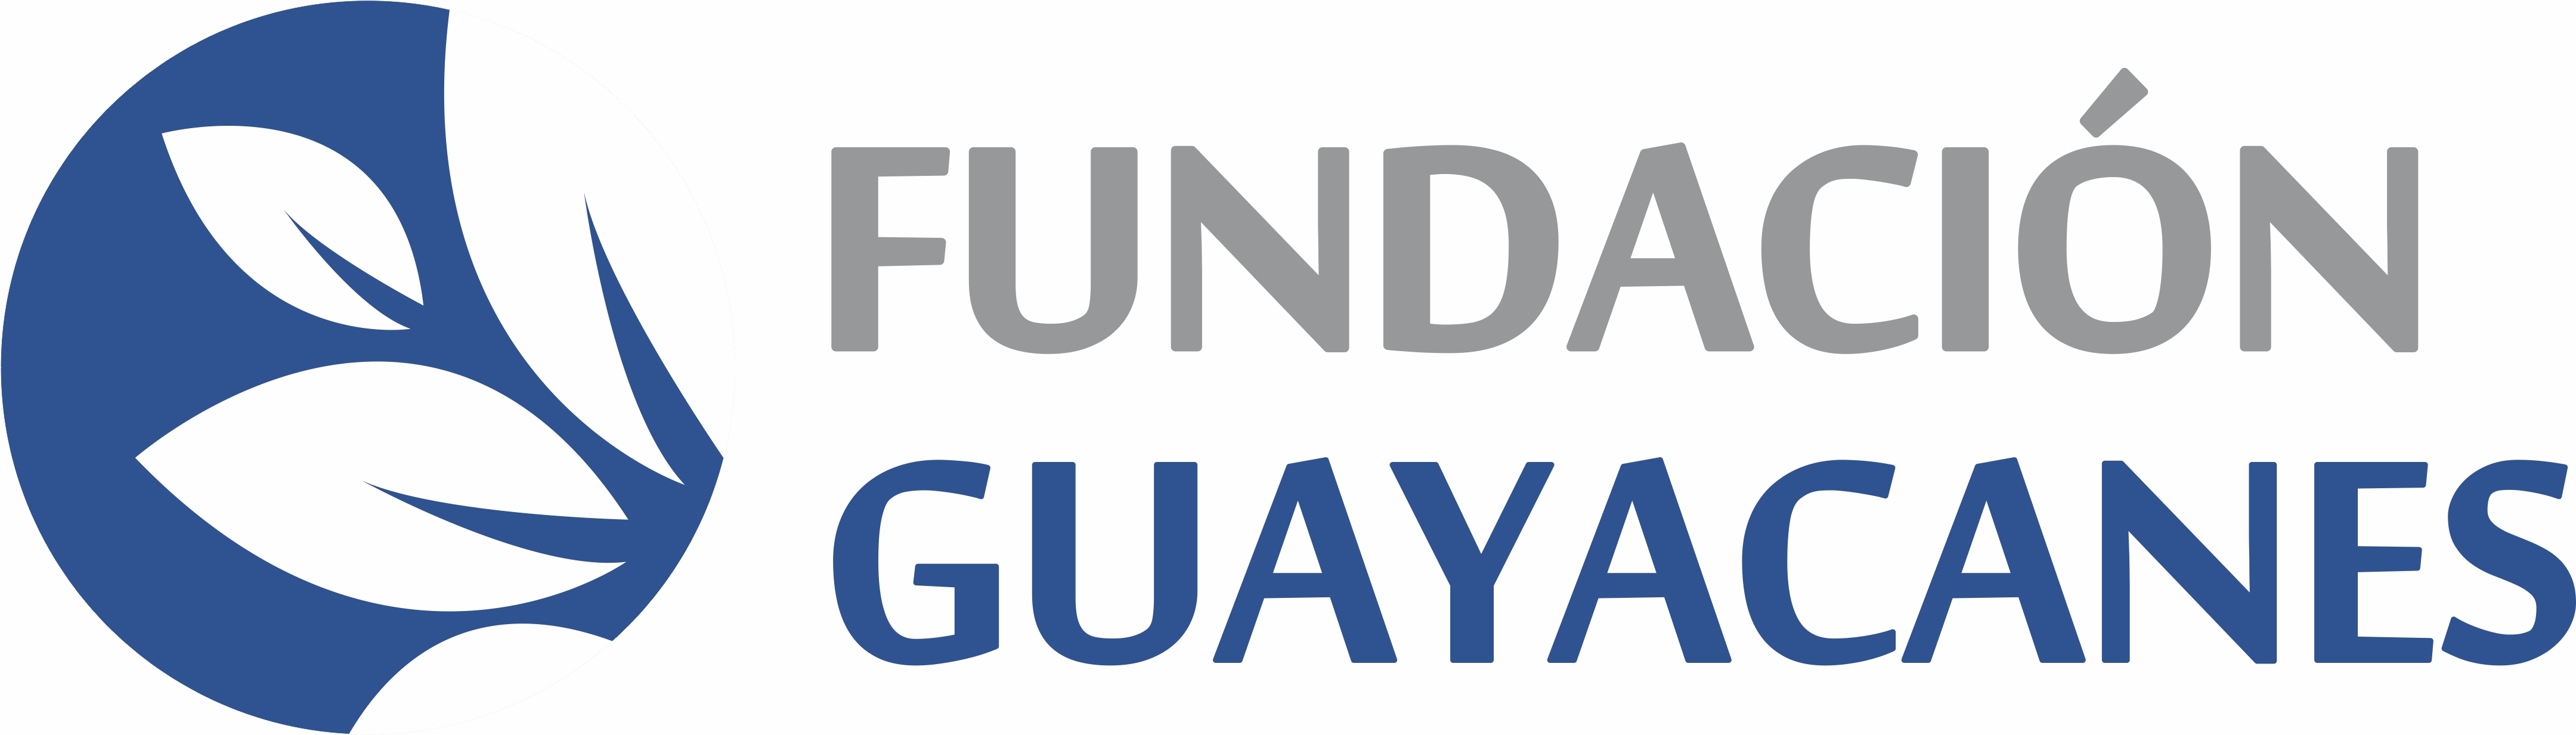 Fundación Guayacanes